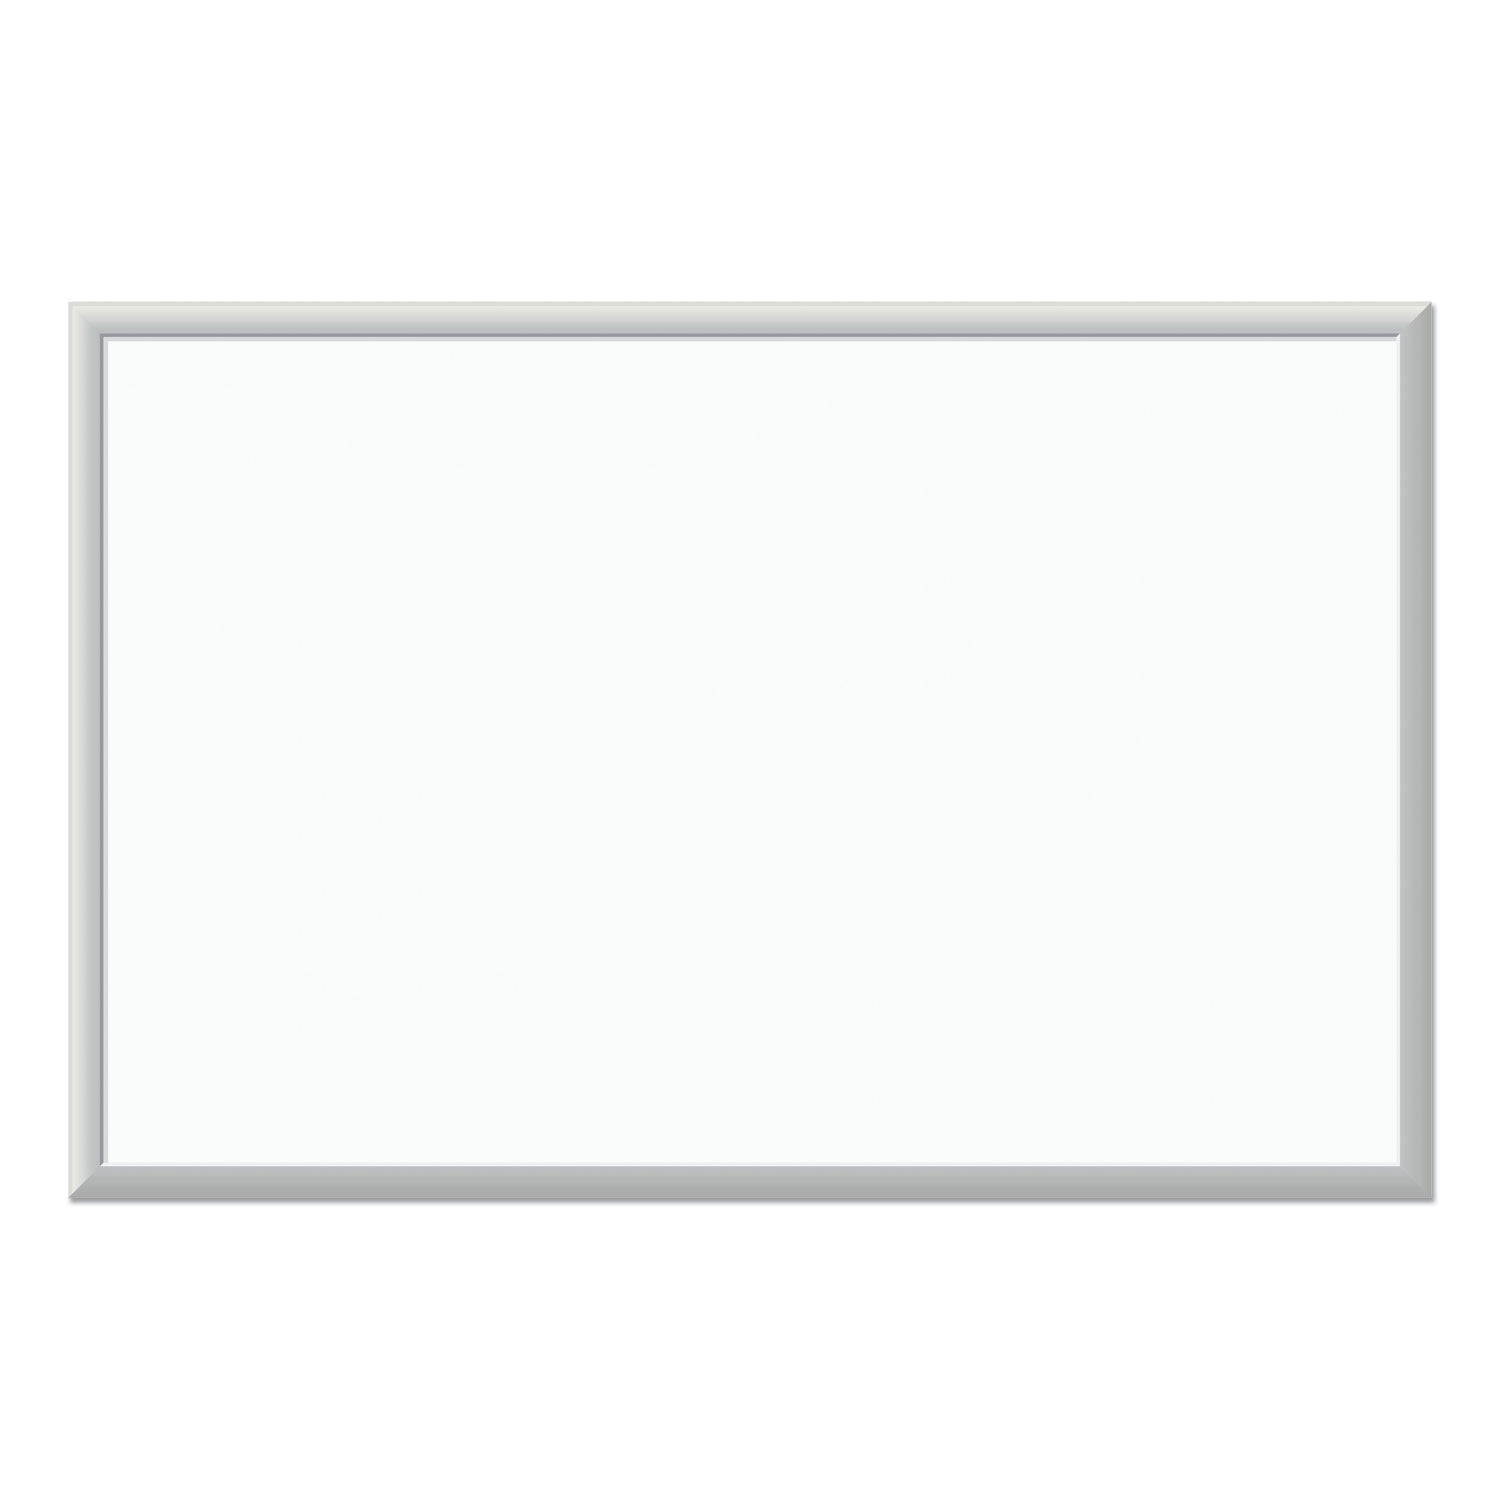 melamine-dry-erase-board-35-x-23-white-surface-silver-frame_ubr031u0001 - 1